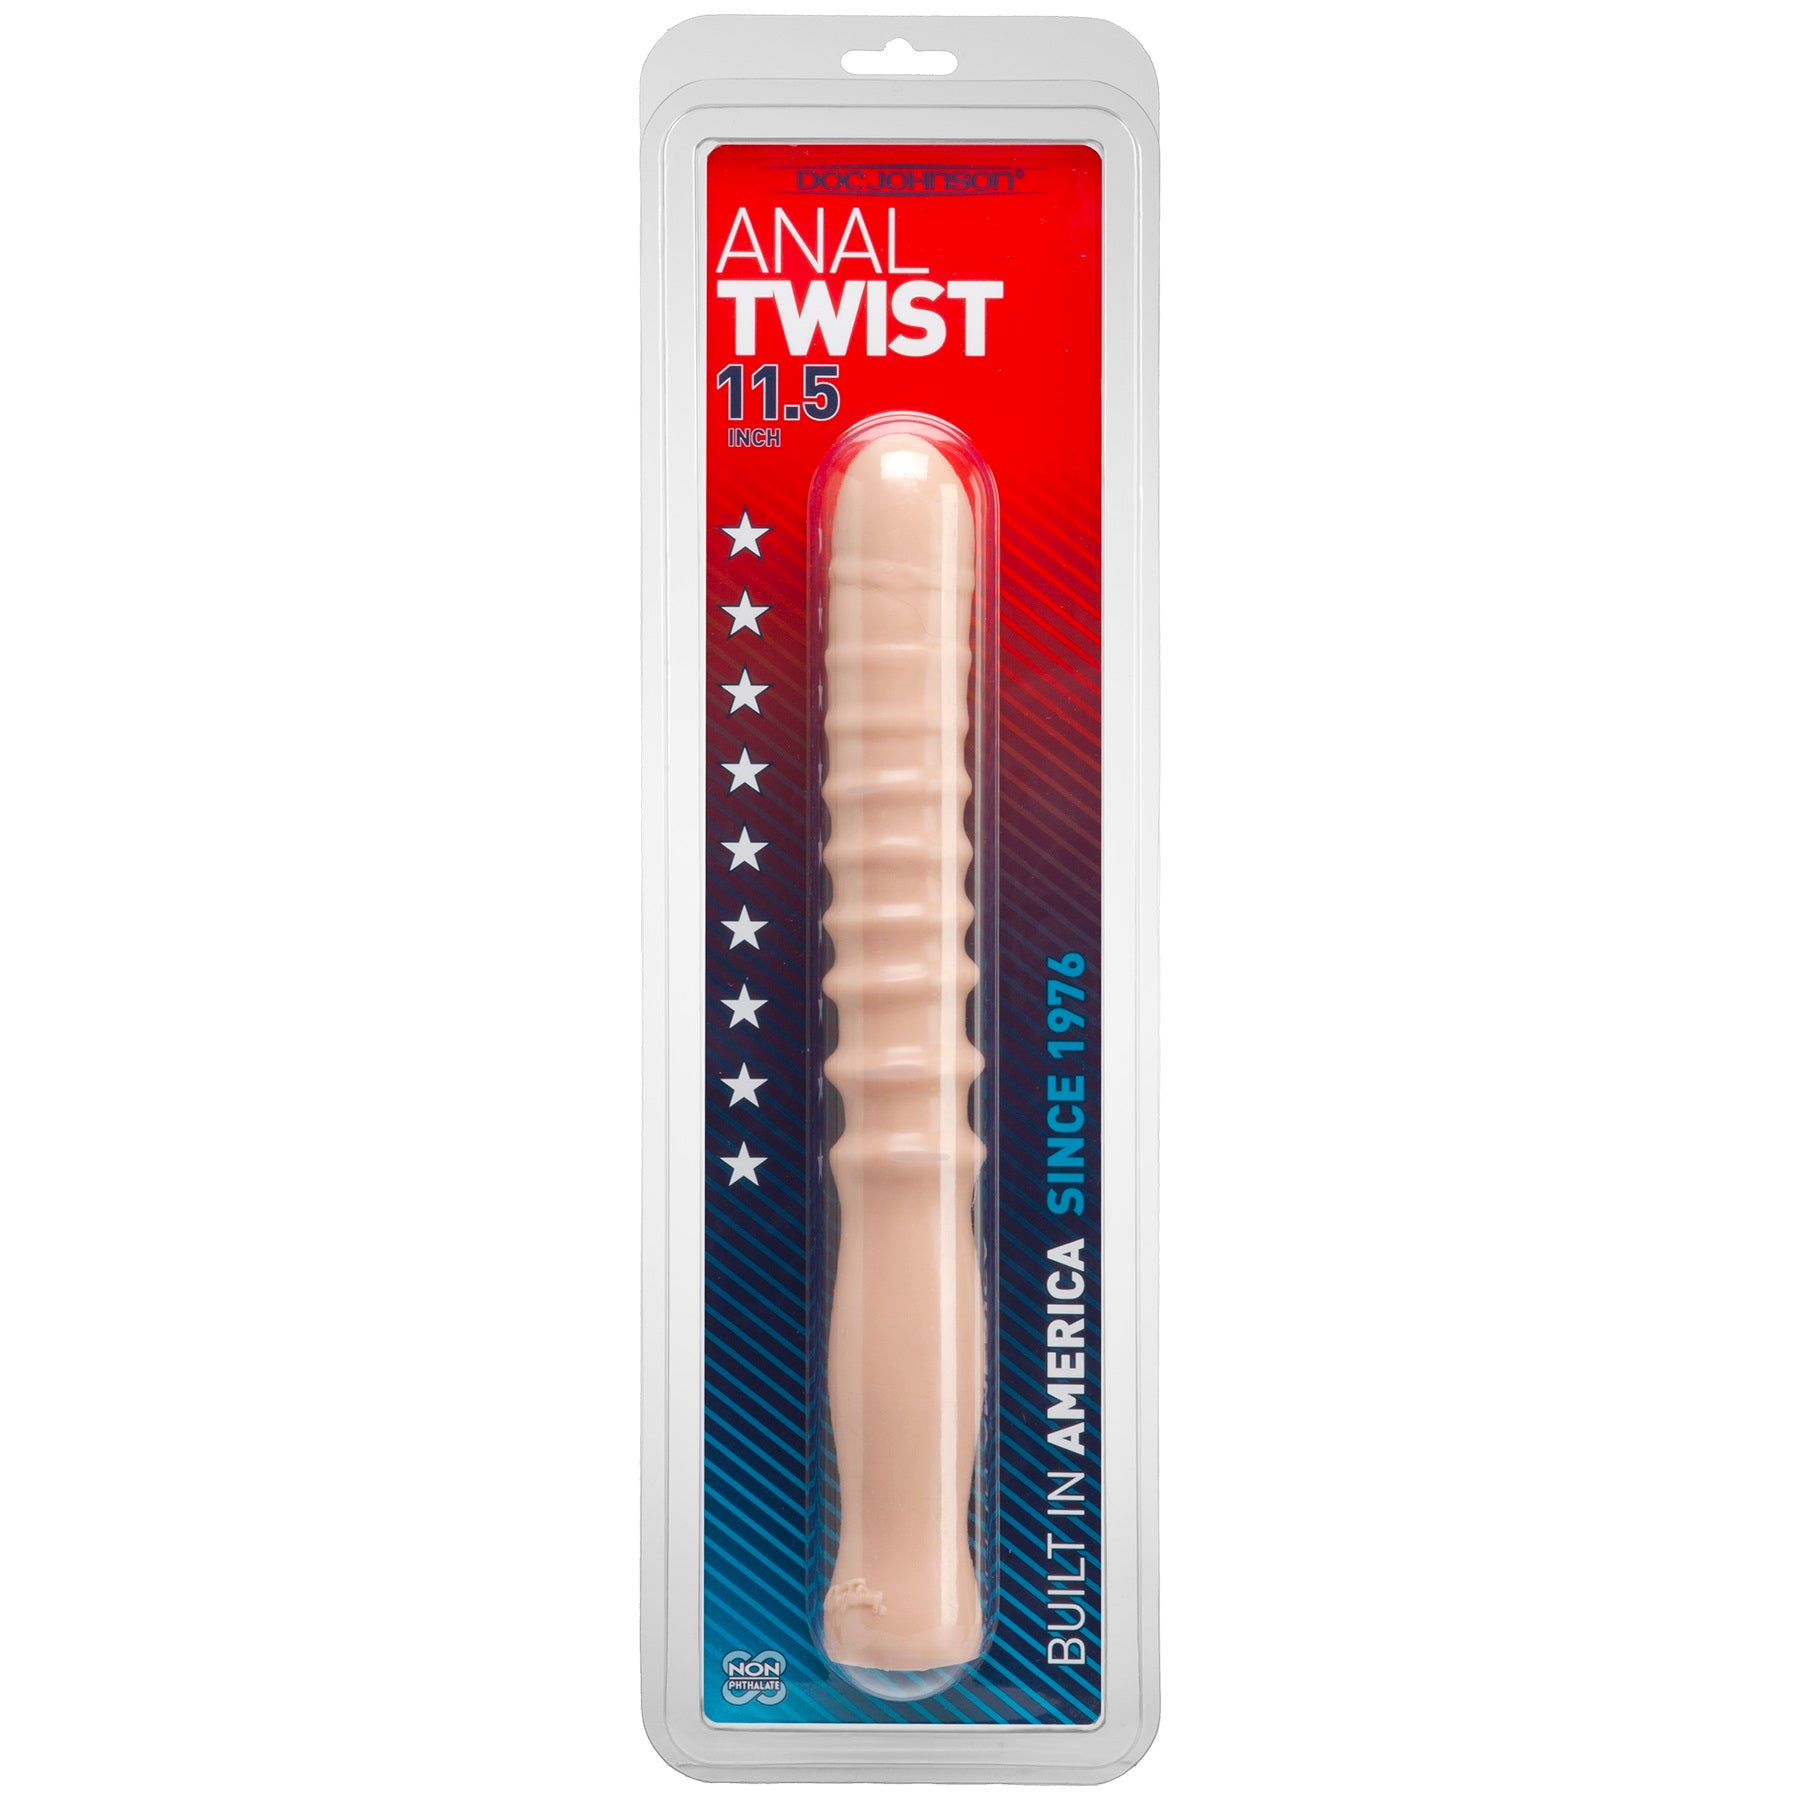 Cork screw anal twist plug for prostate stimulation 